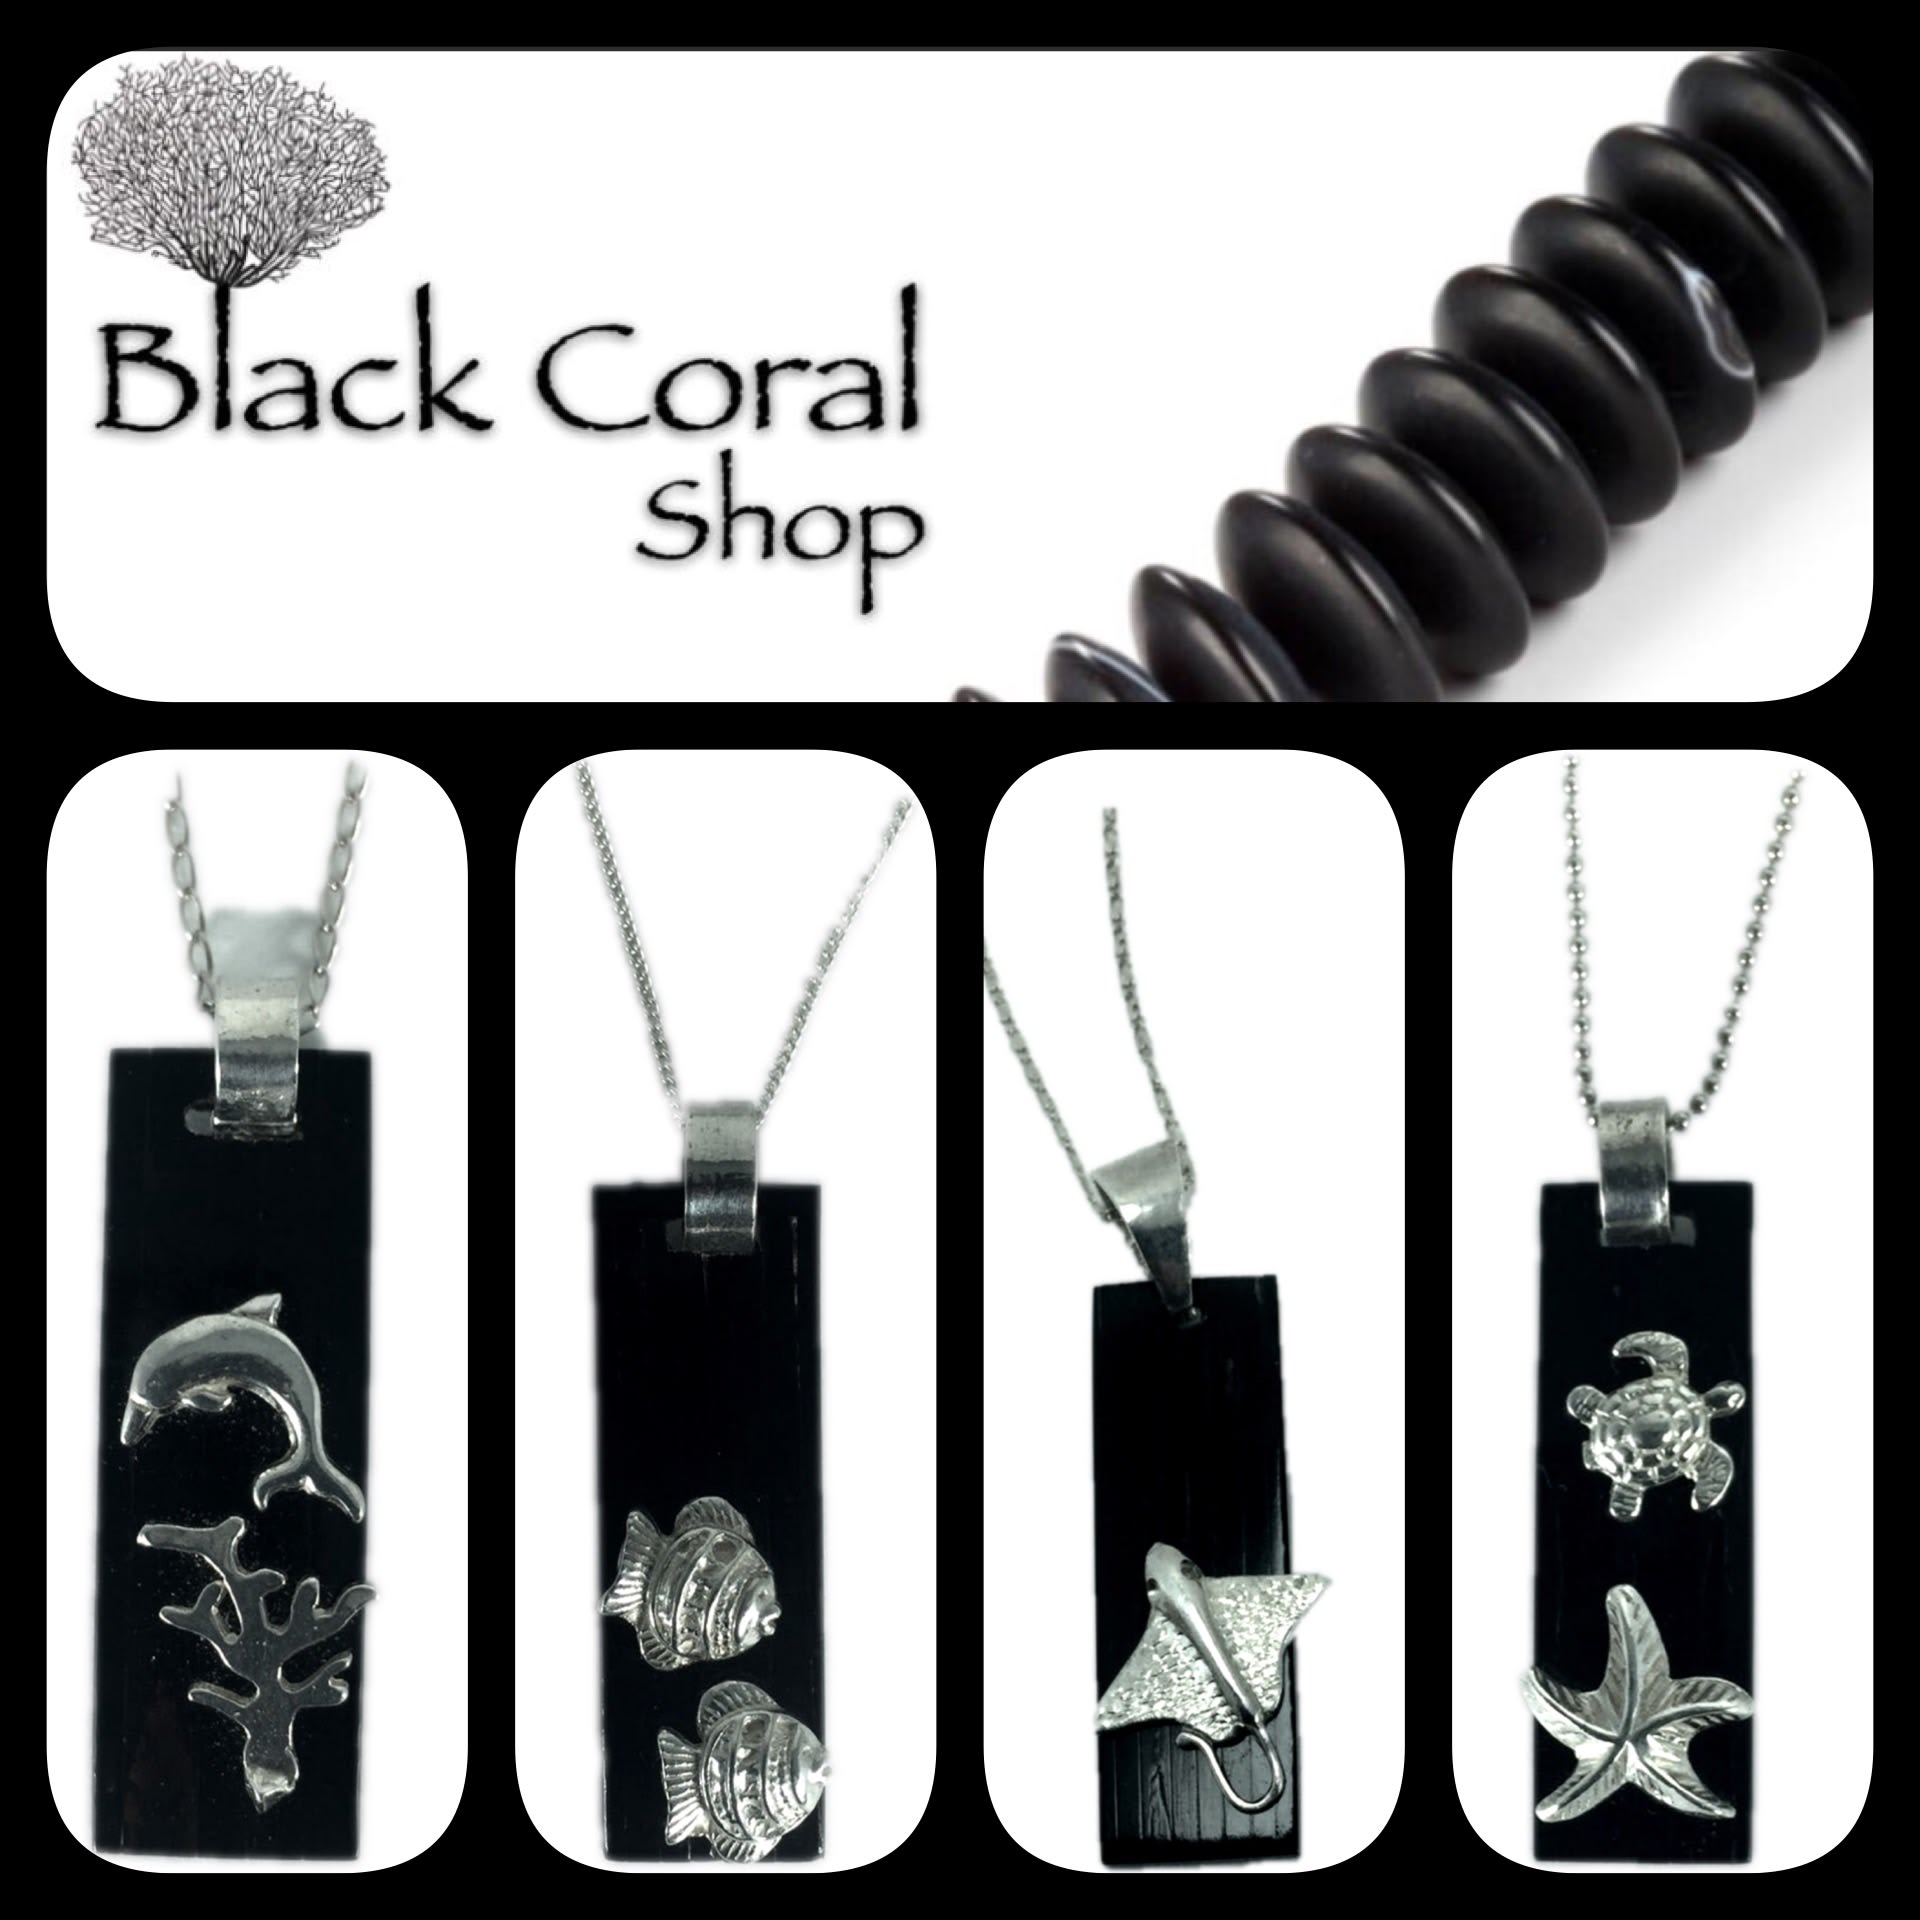 Black Coral Gallery - Joyería artesanal | Cozumel